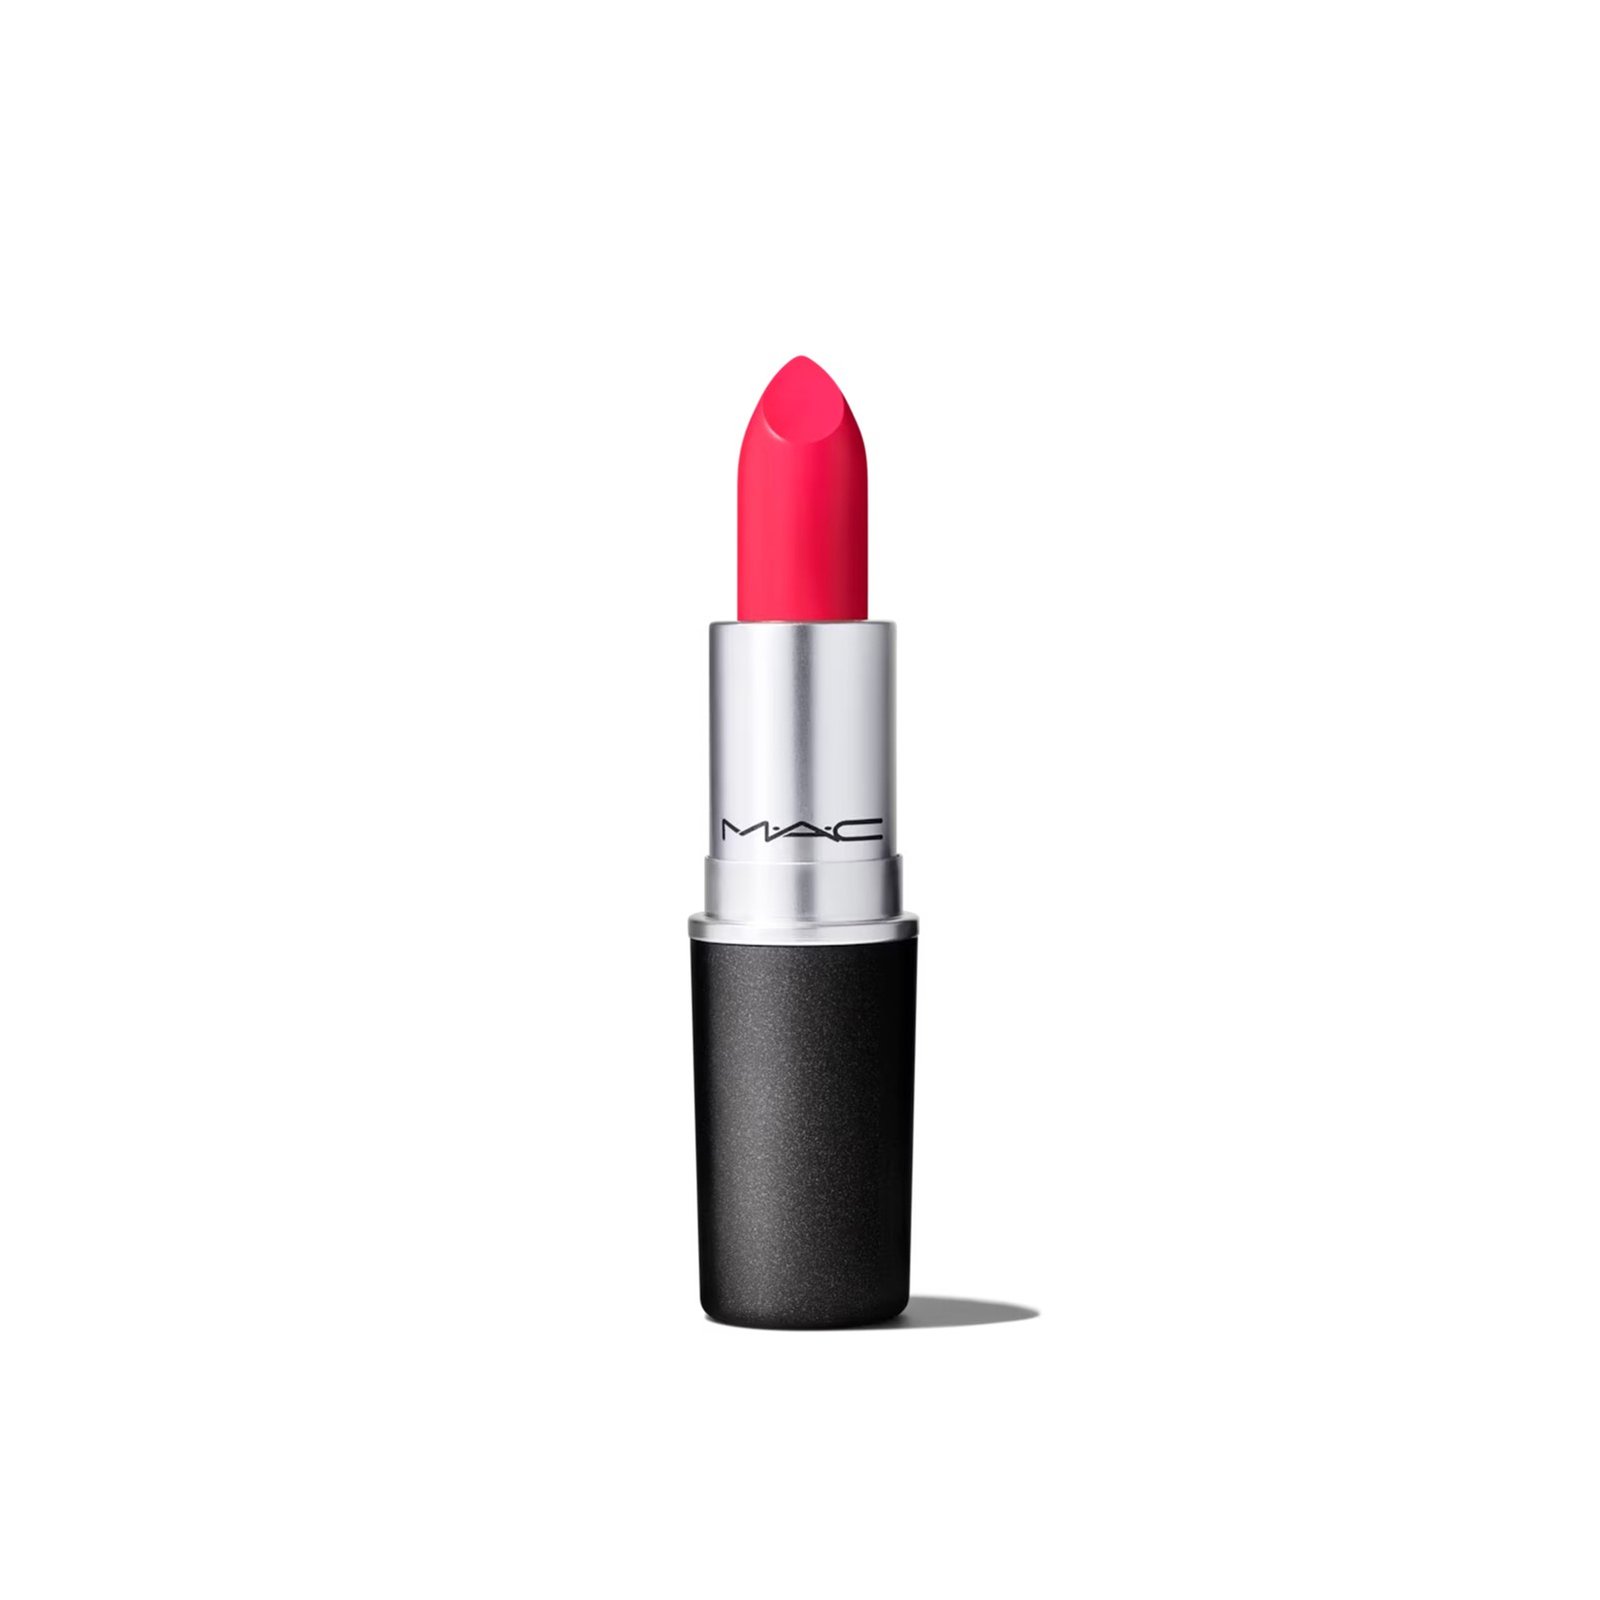 M.A.C Cosmetics Retro Matte Lipstick 706 Relentlessly Red 3g